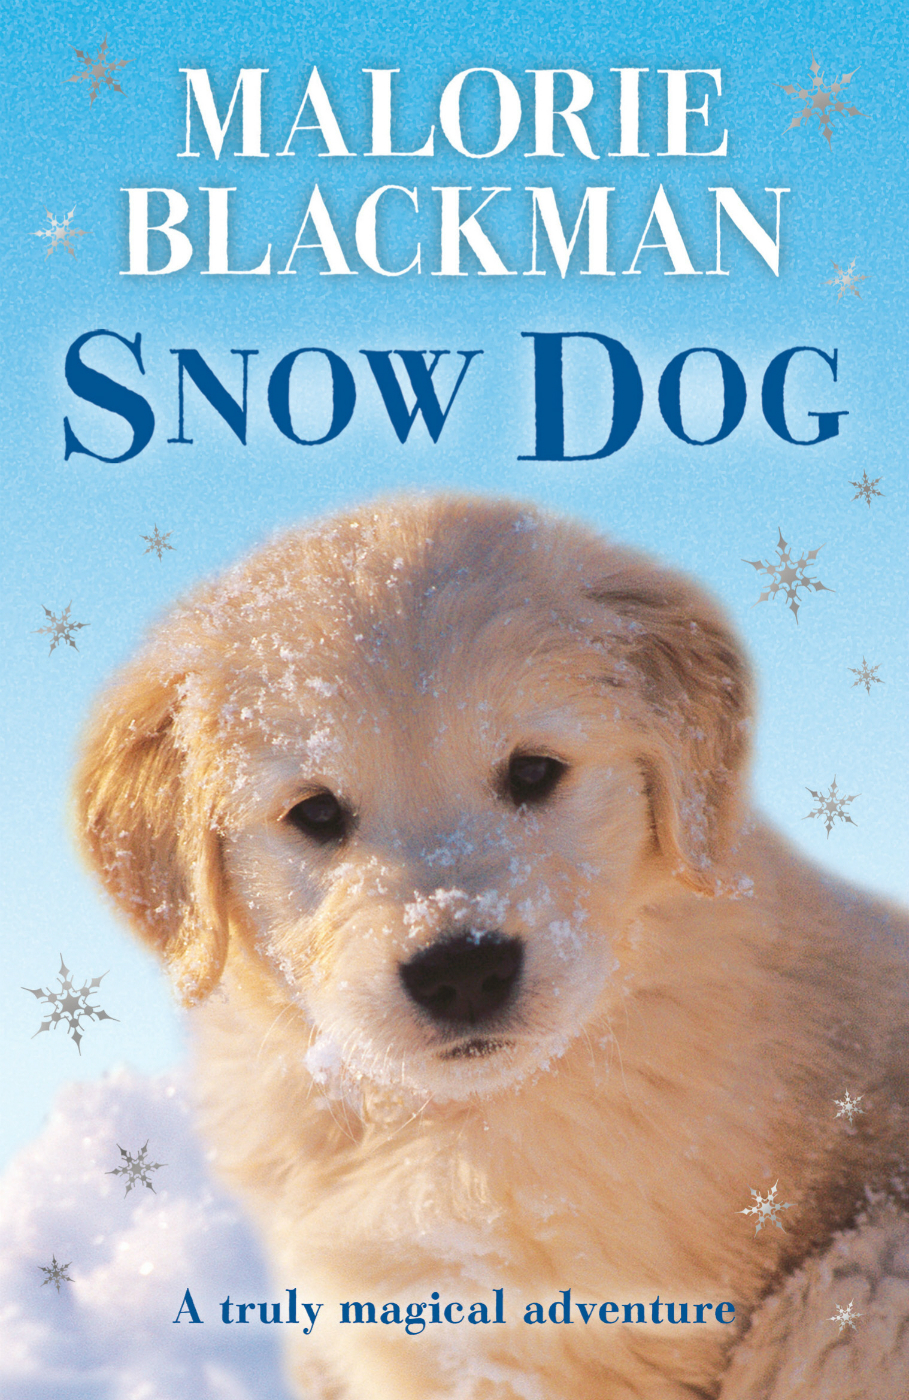 Snow Dog by Malorie Blackman